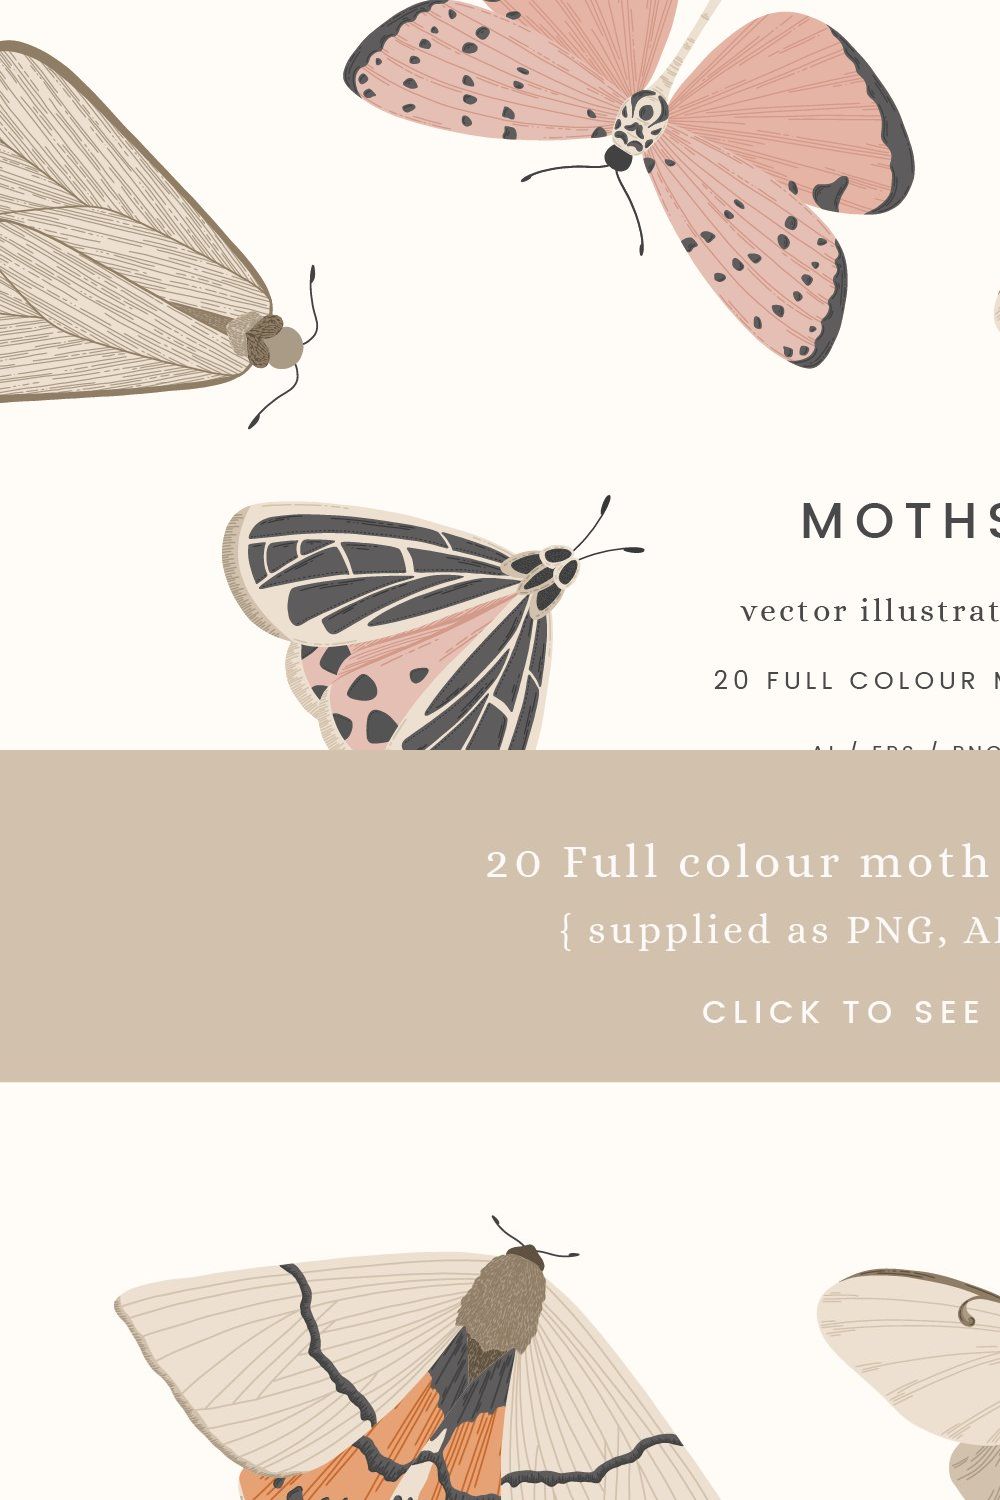 Moths Vector Illustrations pinterest preview image.